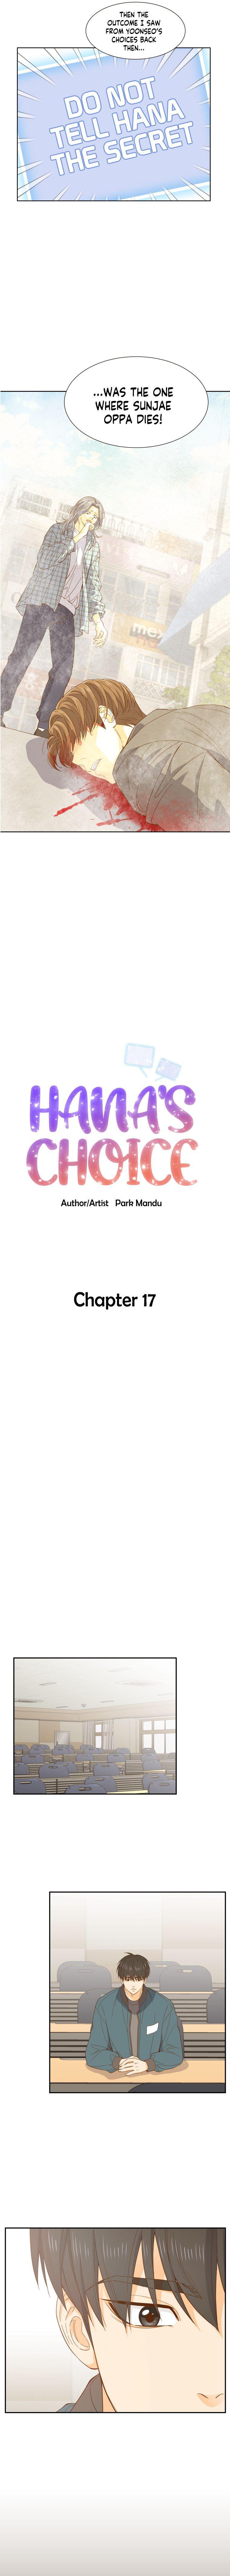 Hana’s Choice Chapter 17 - Page 2